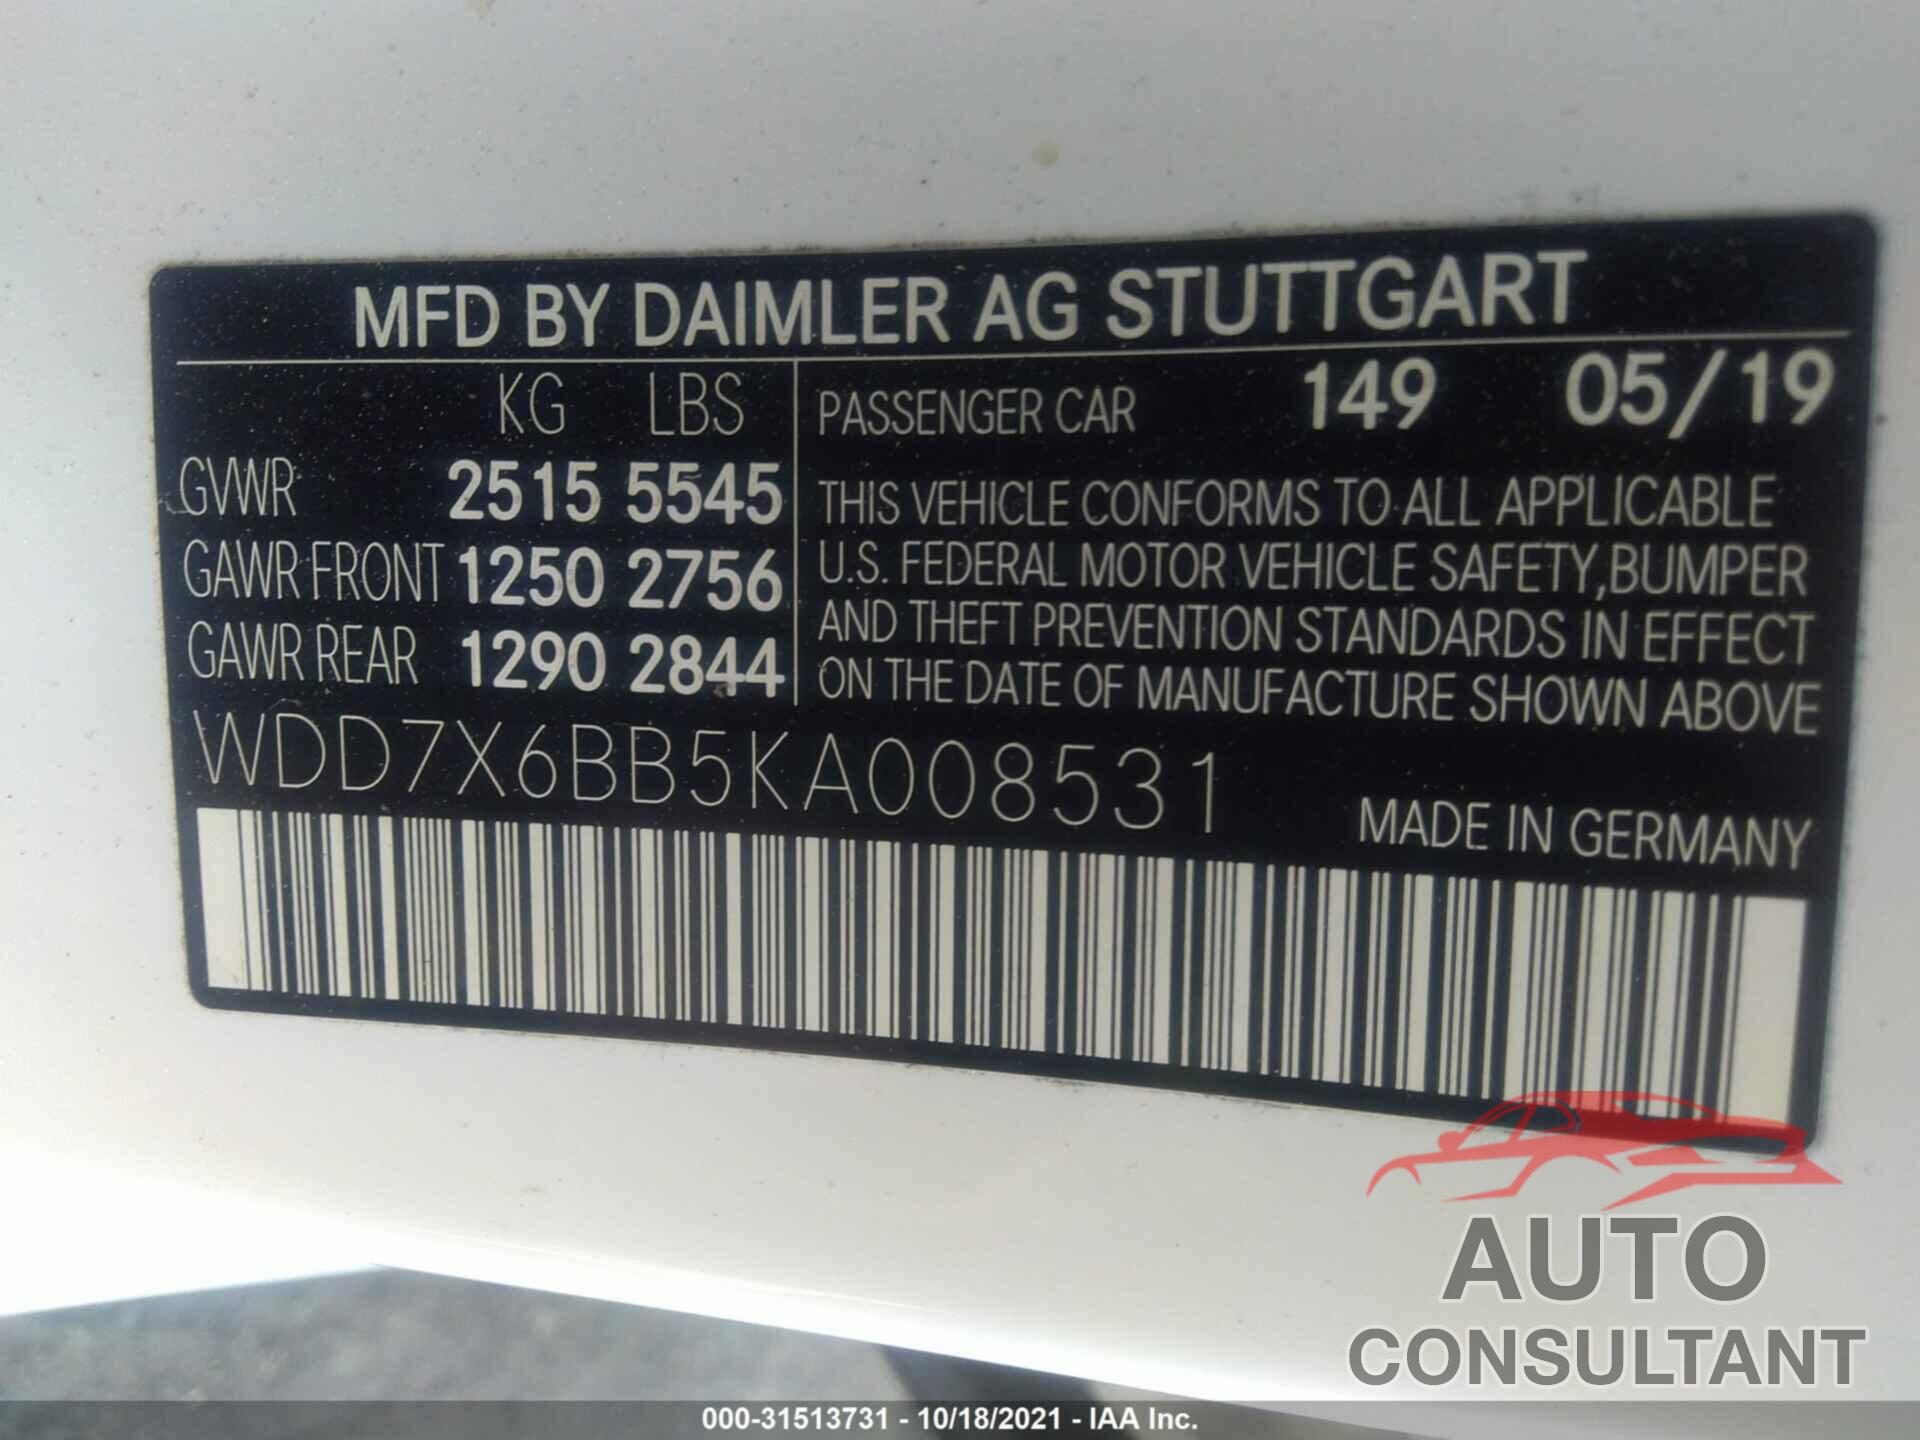 MERCEDES-BENZ AMG GT 2019 - WDD7X6BB5KA008531